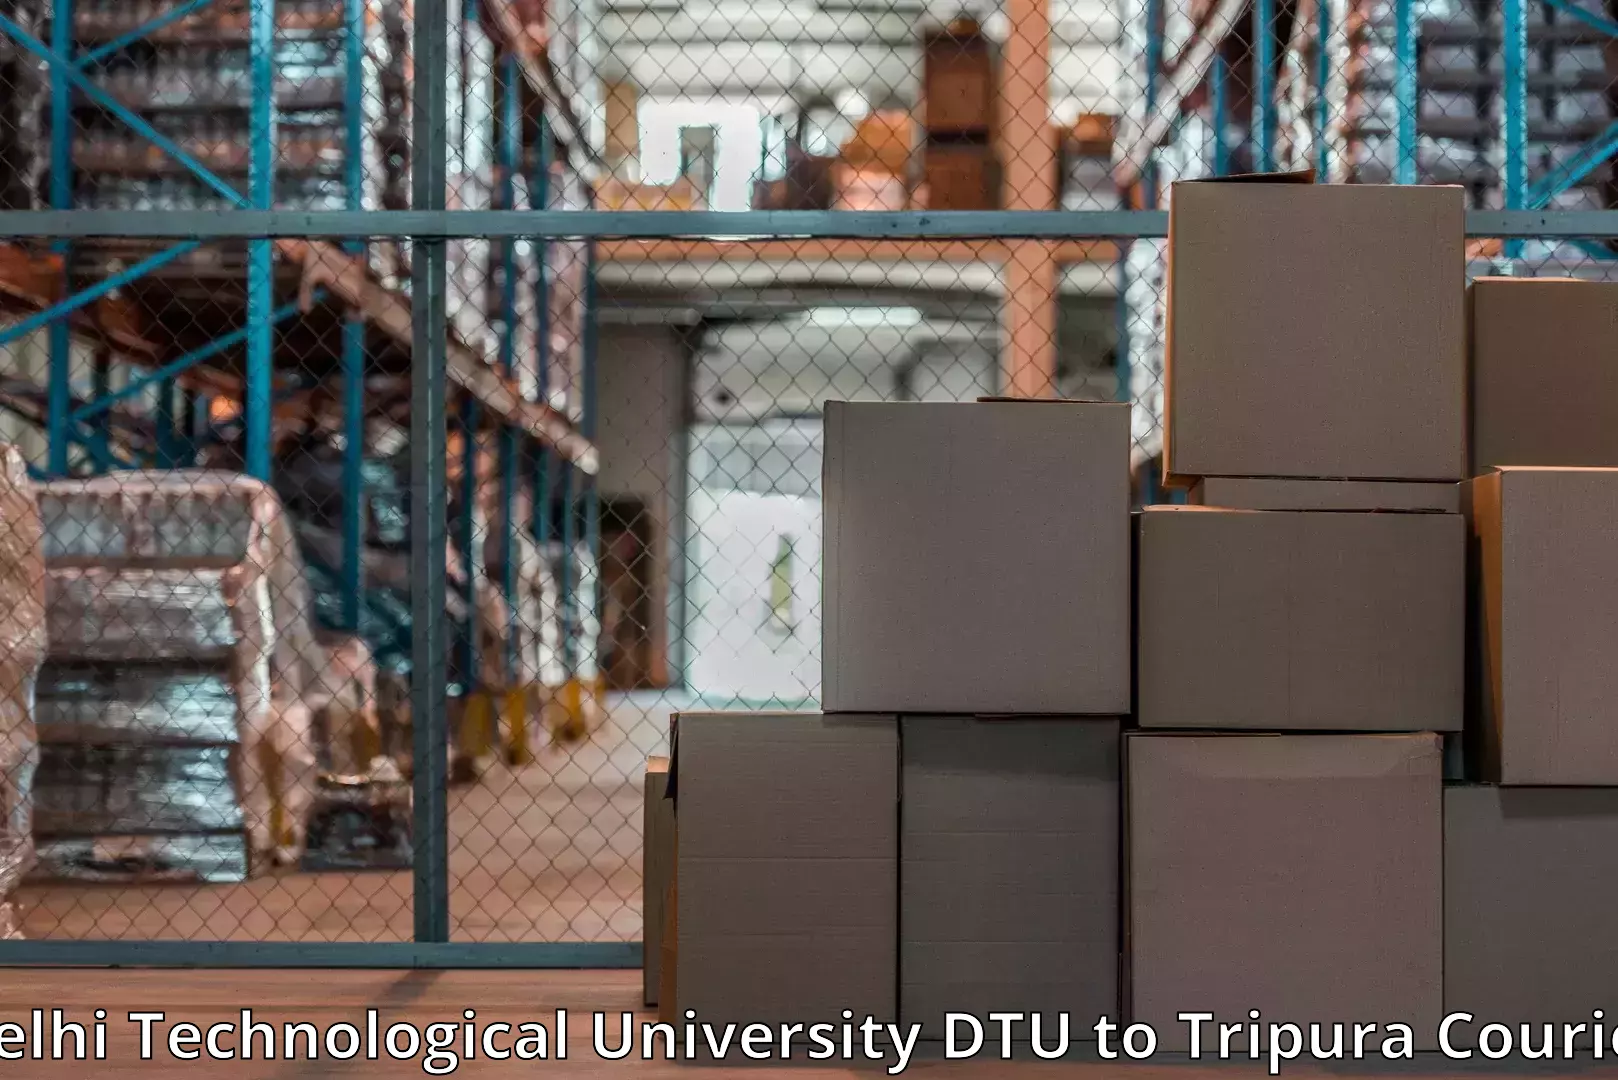 Furniture delivery service Delhi Technological University DTU to Tripura